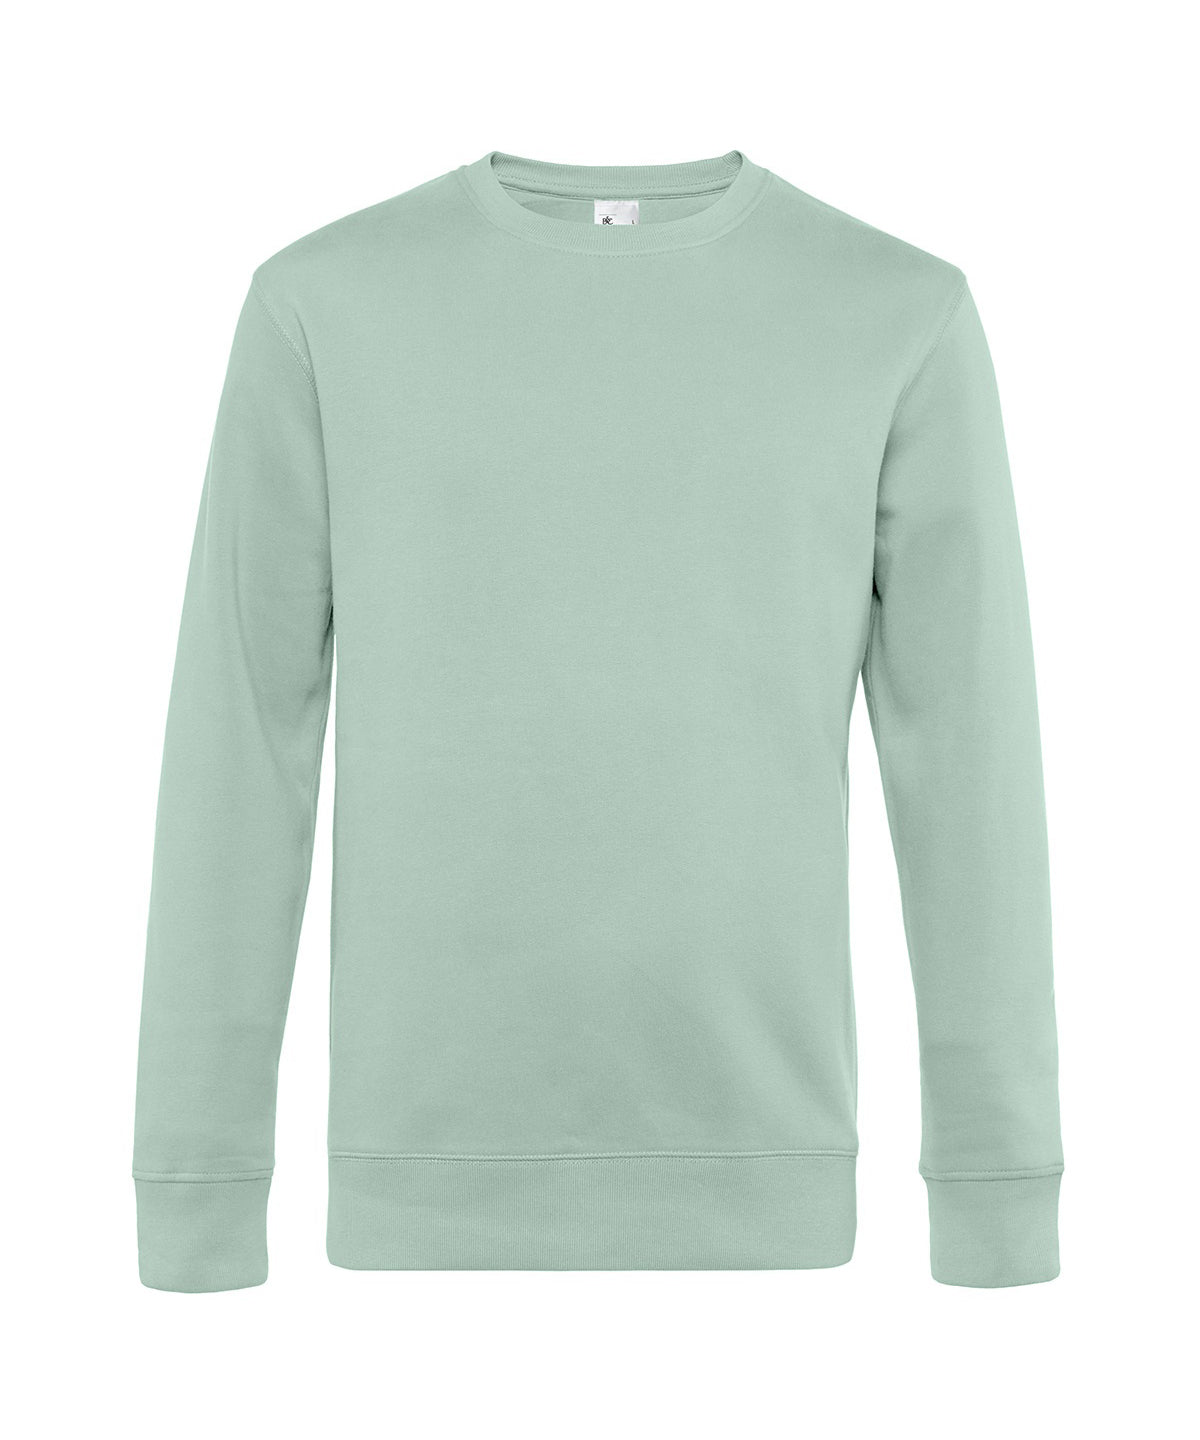 Personalised Sweatshirts - Light Green B&C Collection B&C KING Crew Neck